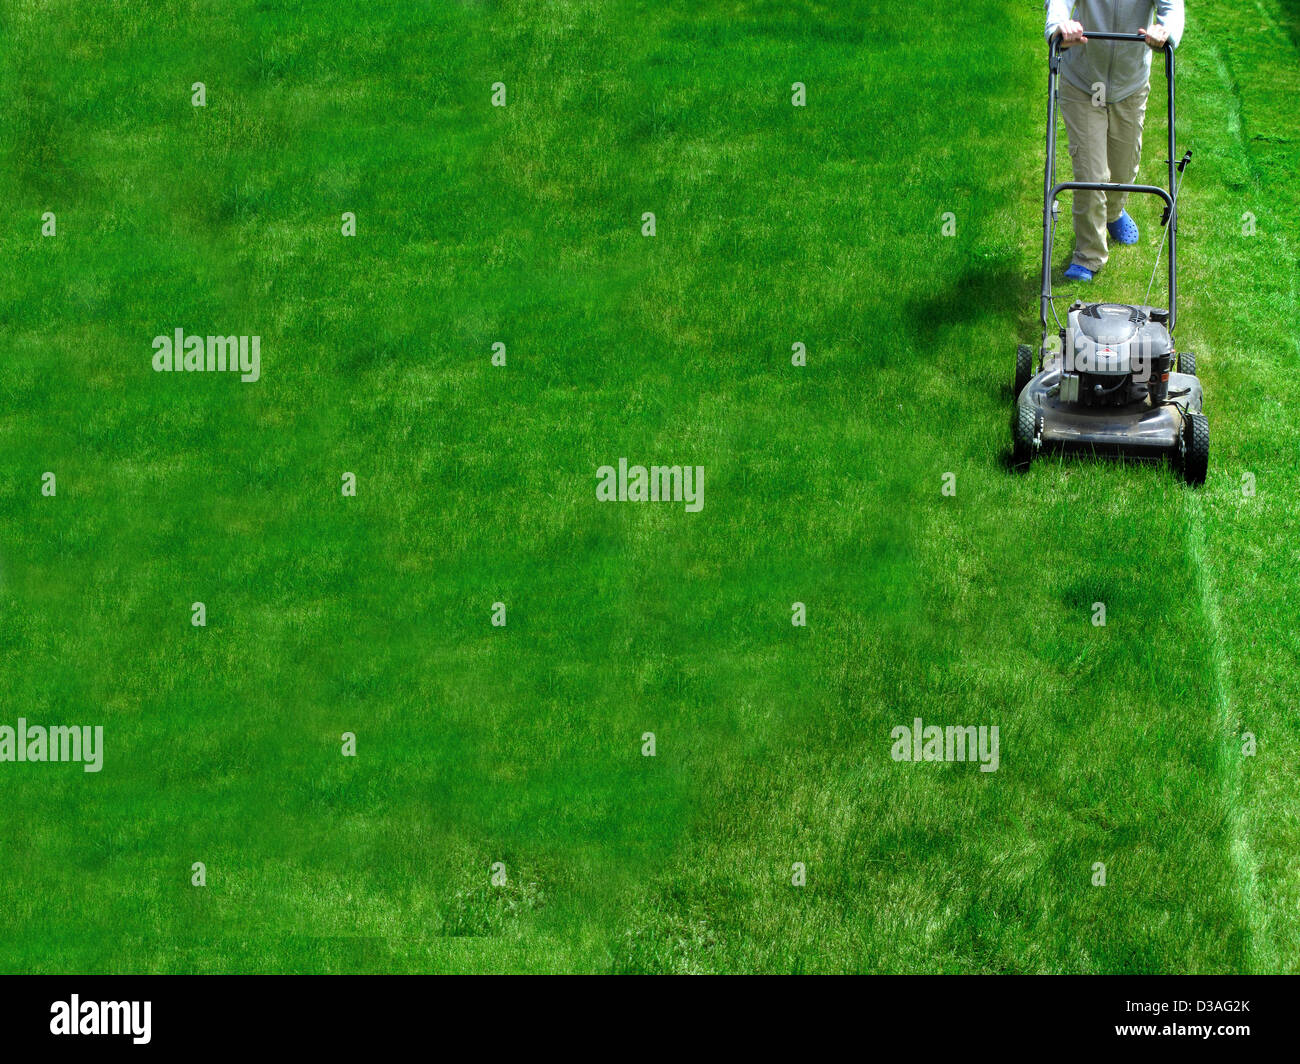 Young Girl Mähen grünen Rasen mit Push-Mäher Stockfoto